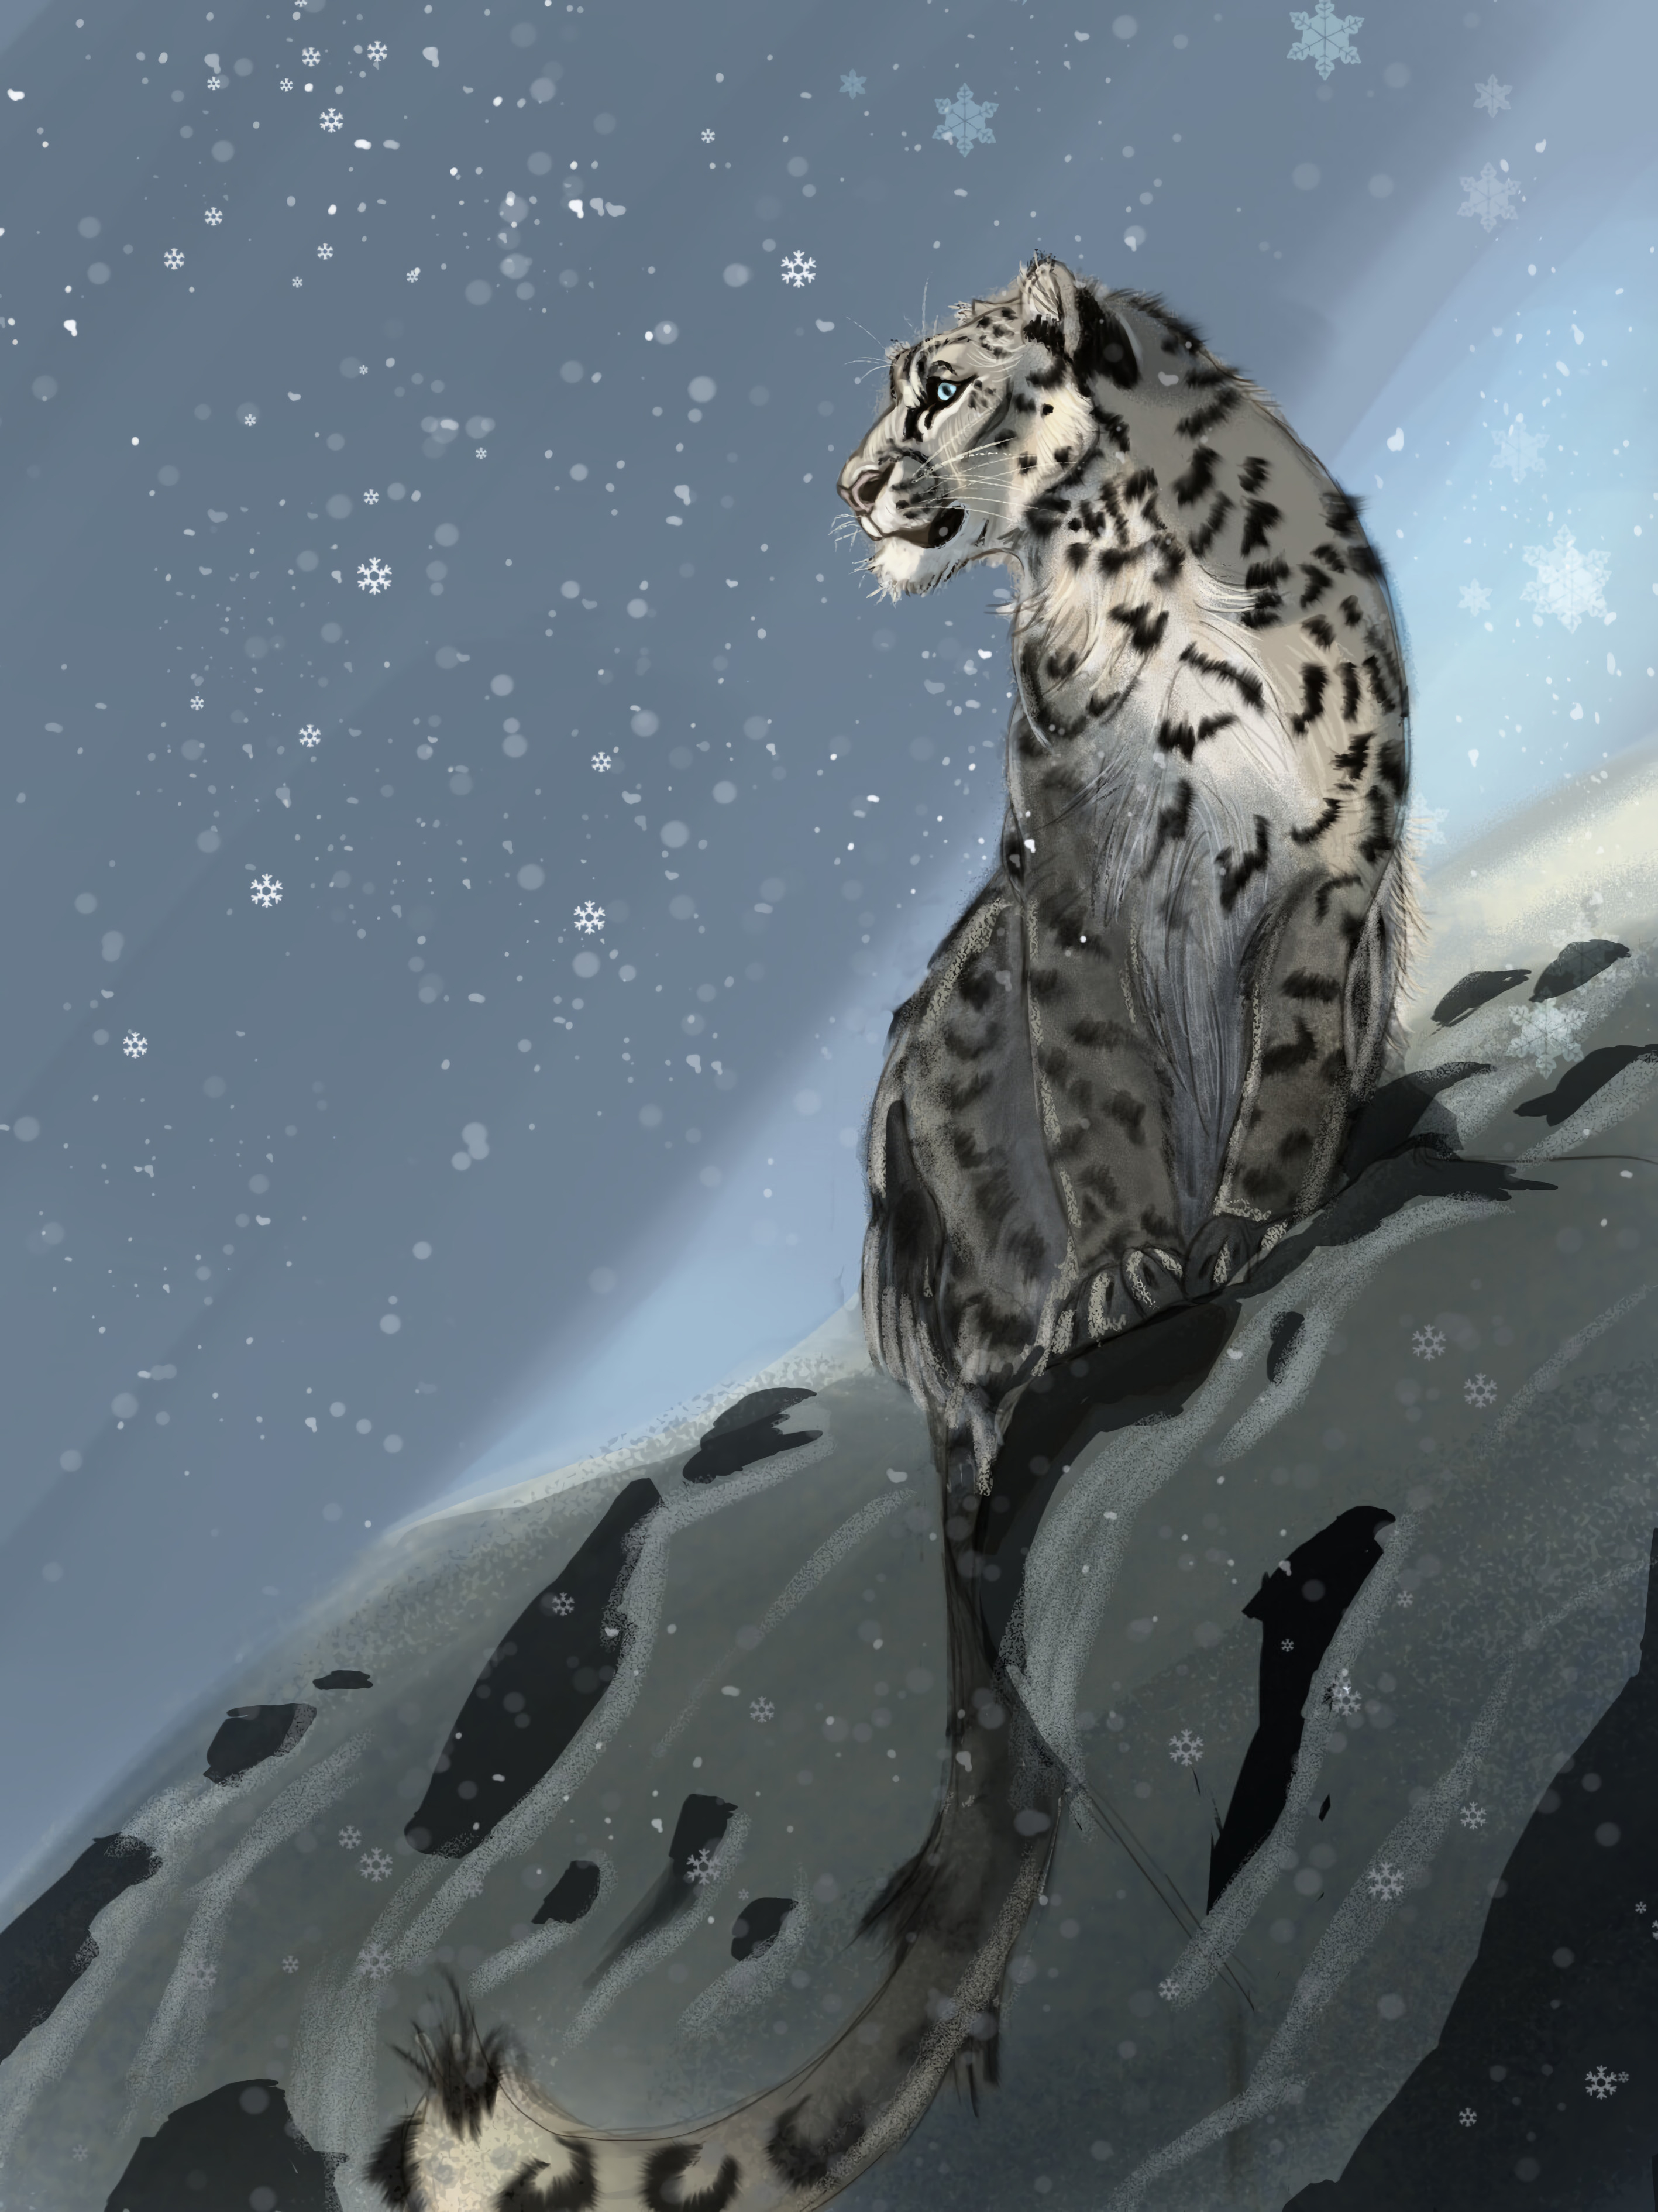 Wallpapers wallpaper snow leopard looking away snowflakes on the desktop